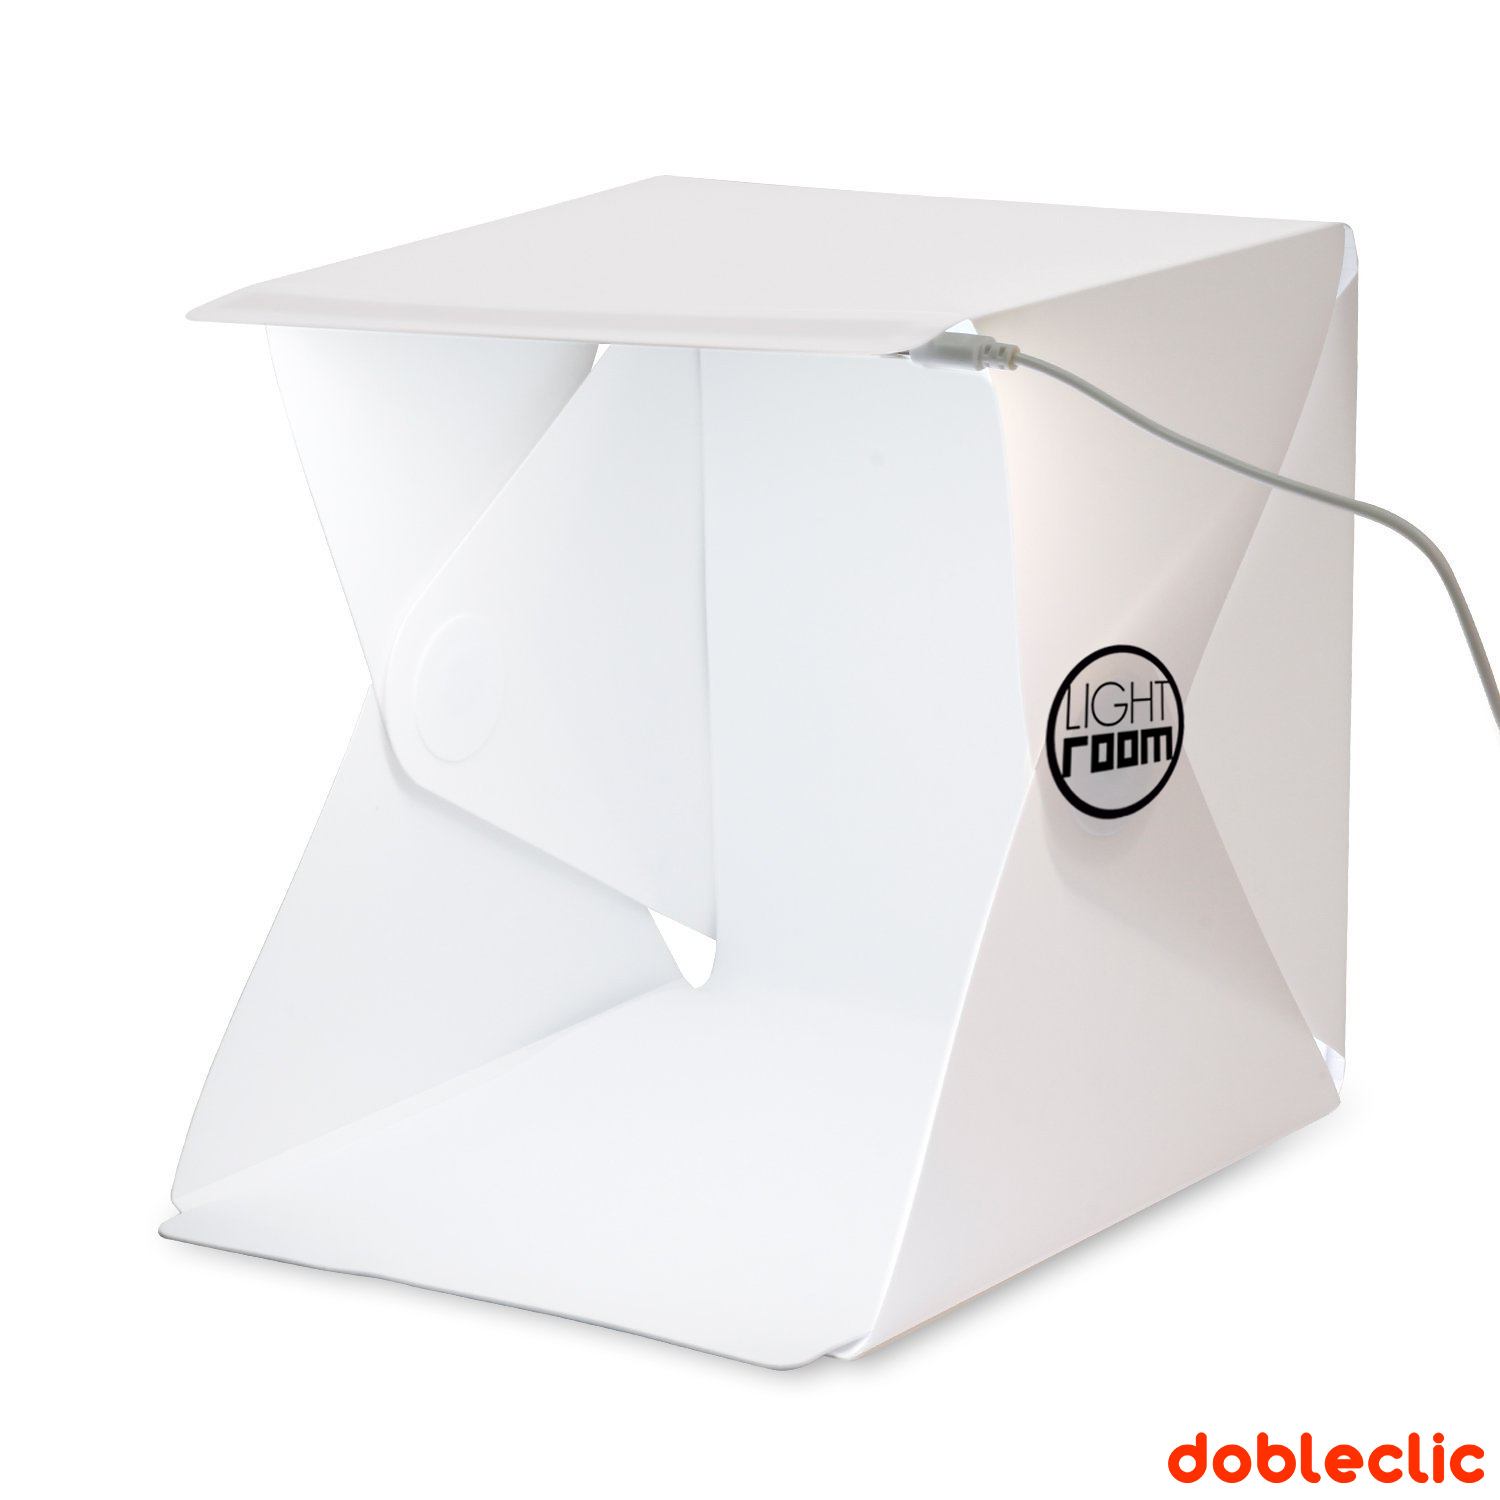 bronce Joya Típico Caja de Luz DobleClic Light Room – DobleClic Estudio de Vídeo y Diseño